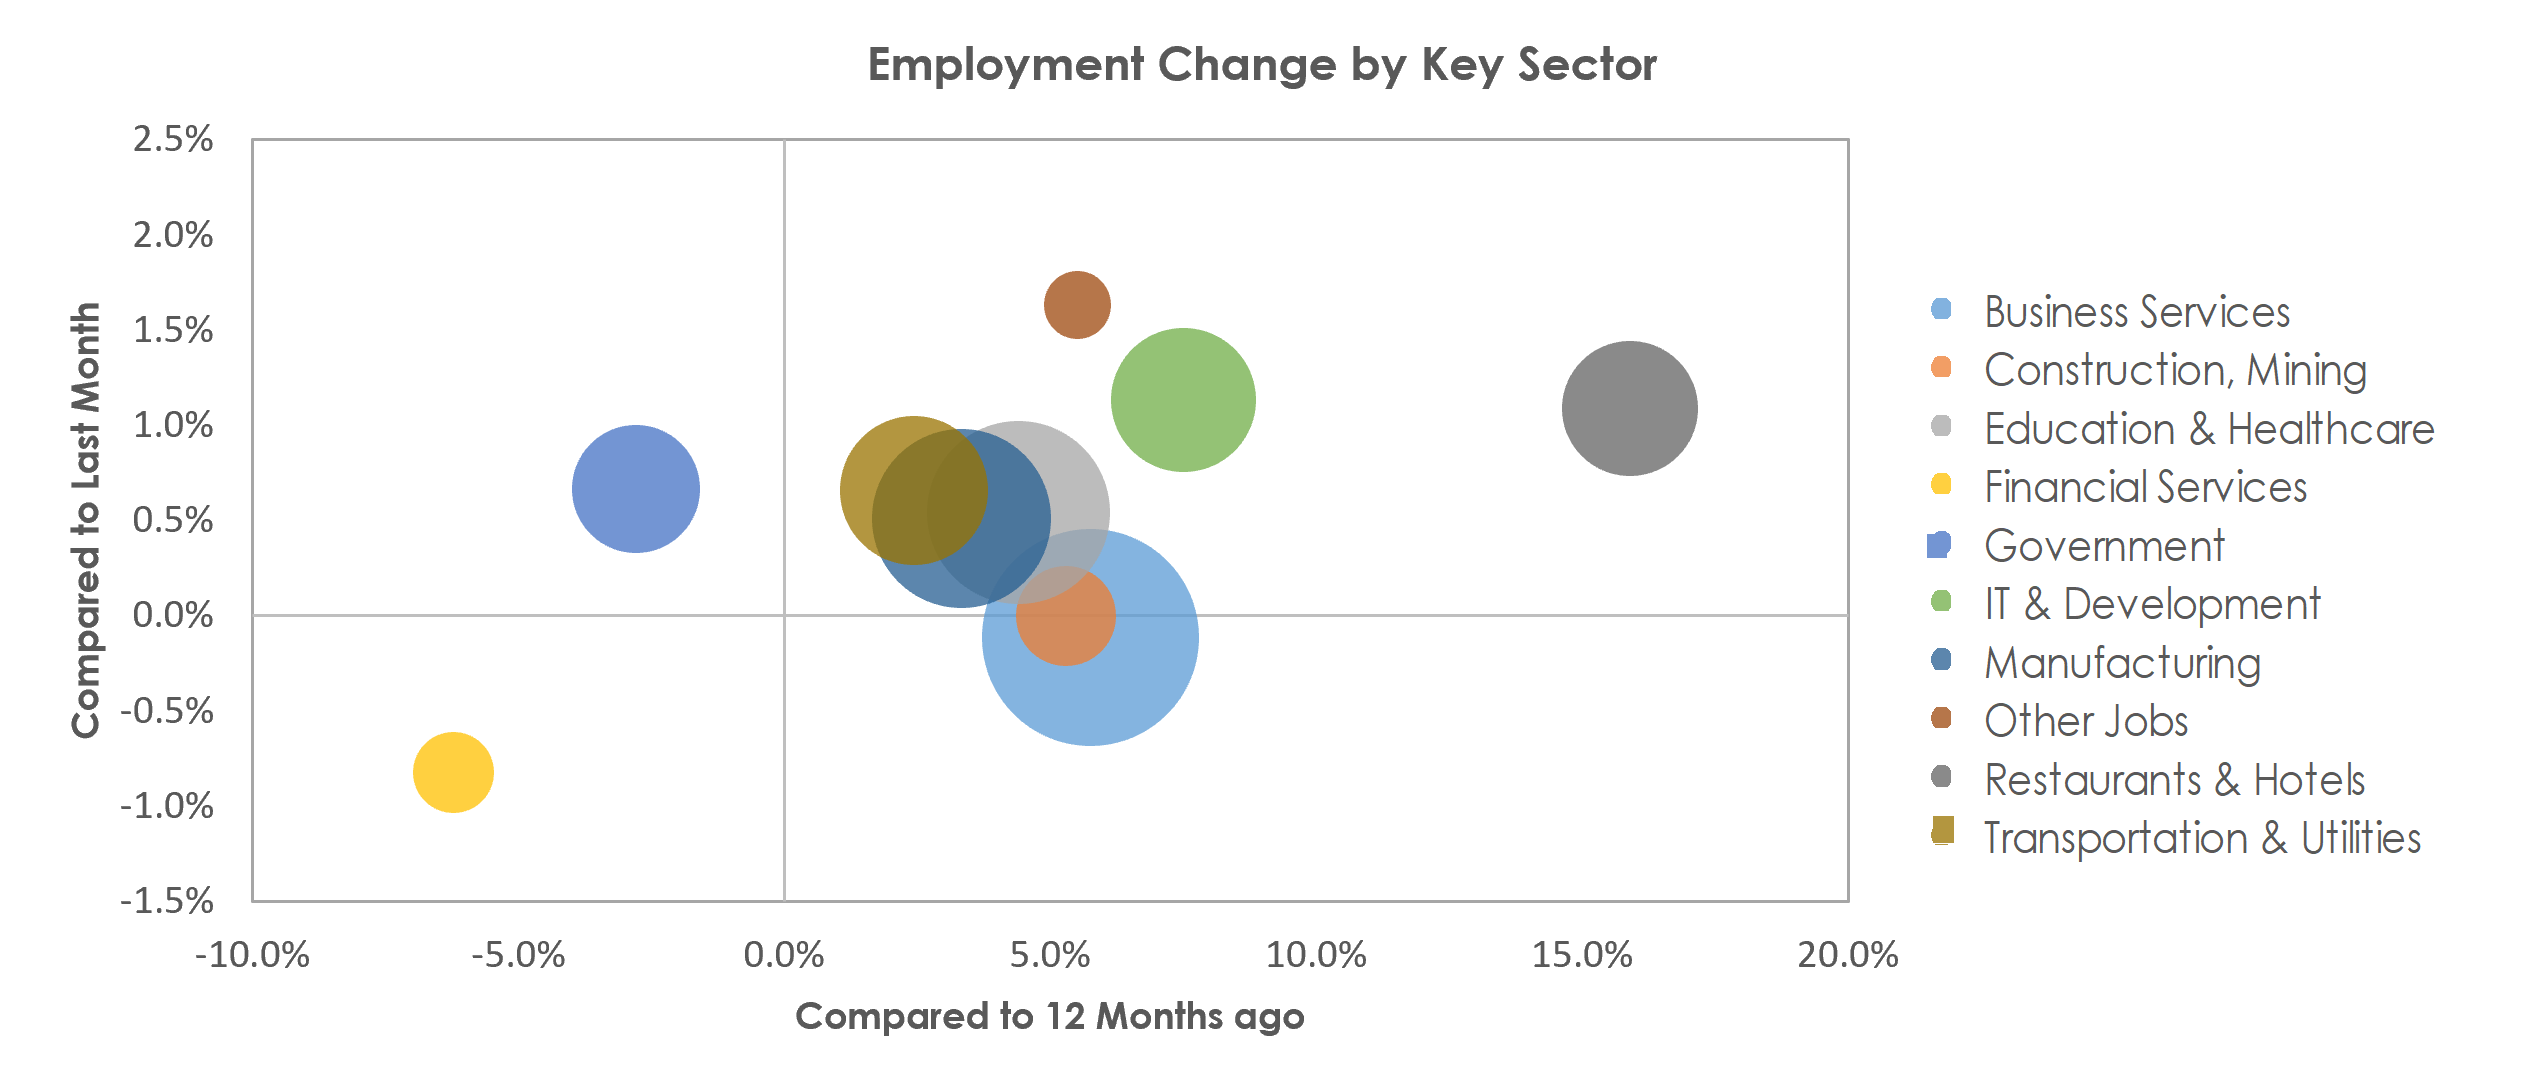 San Jose-Sunnyvale-Santa Clara, CA Unemployment by Industry August 2022